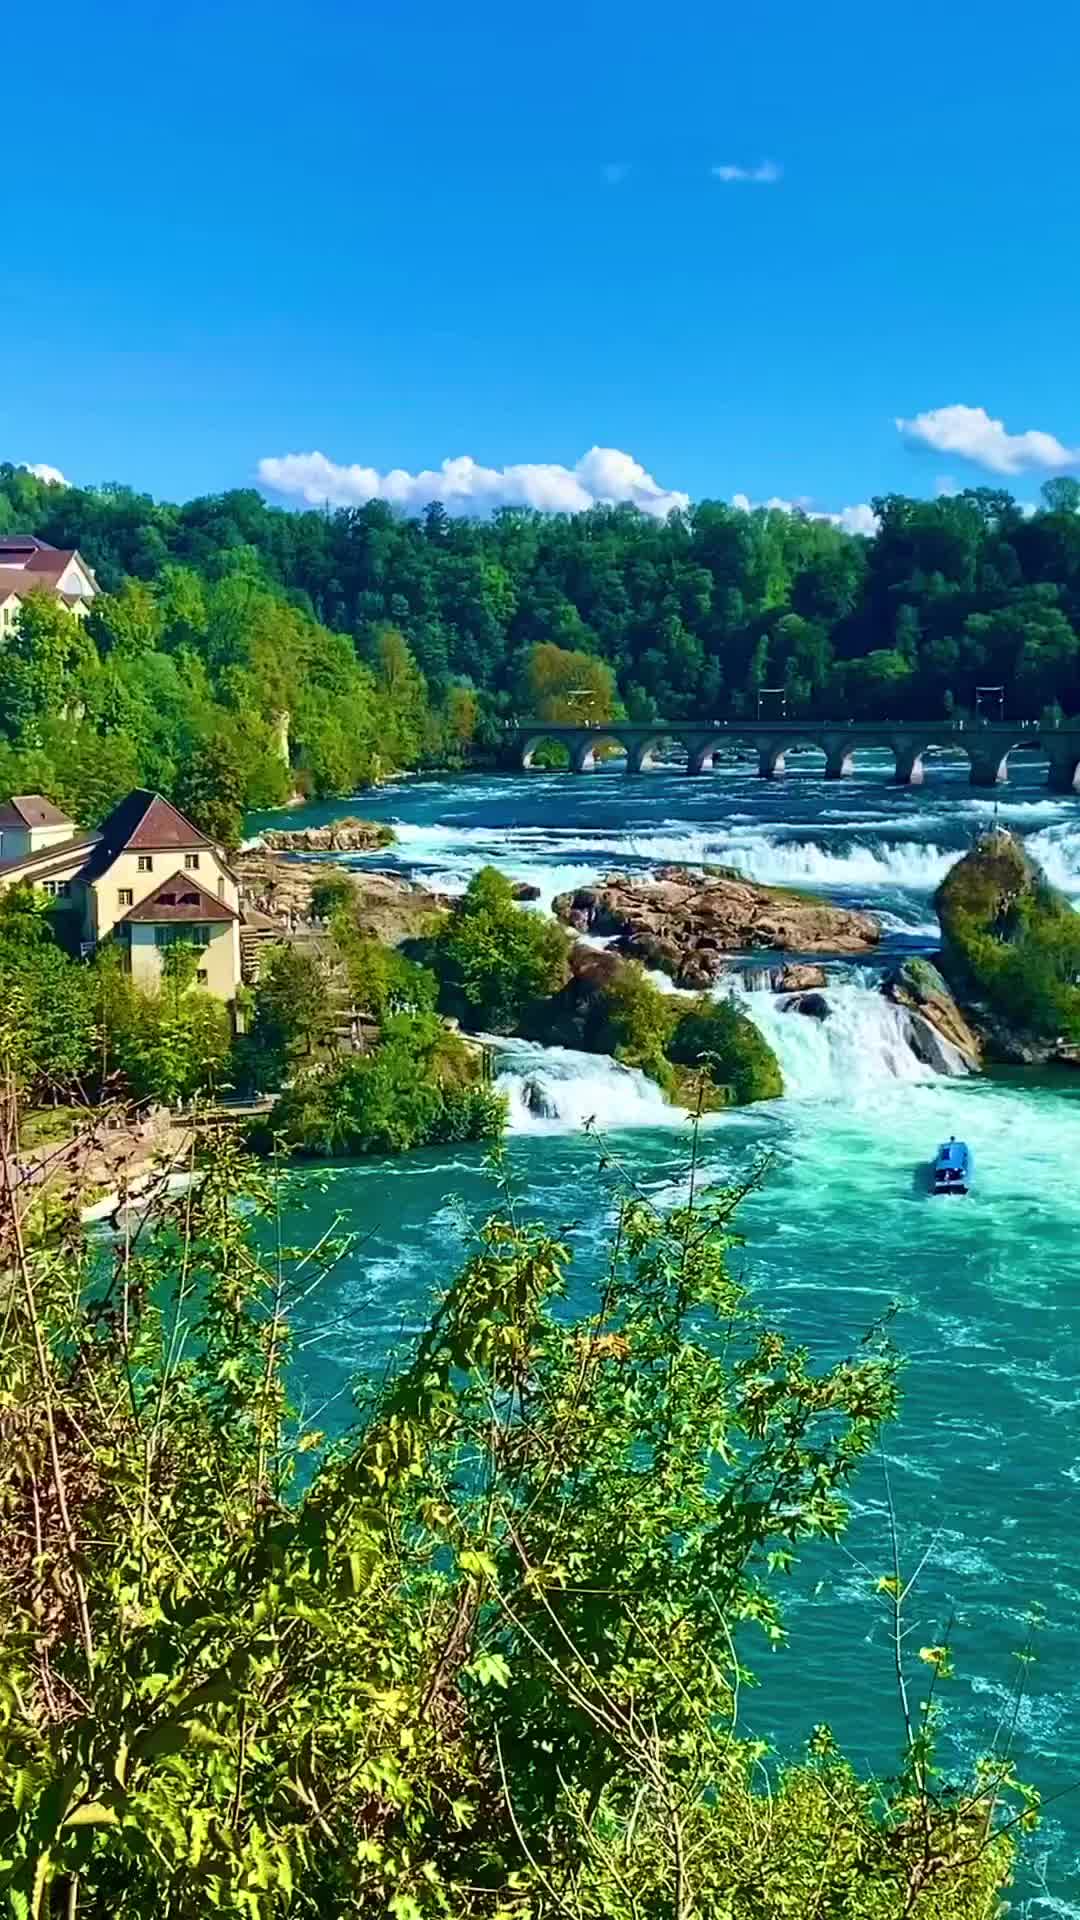 Must-Visit Rheinfall: Europe's Largest Waterfall Near Zurich